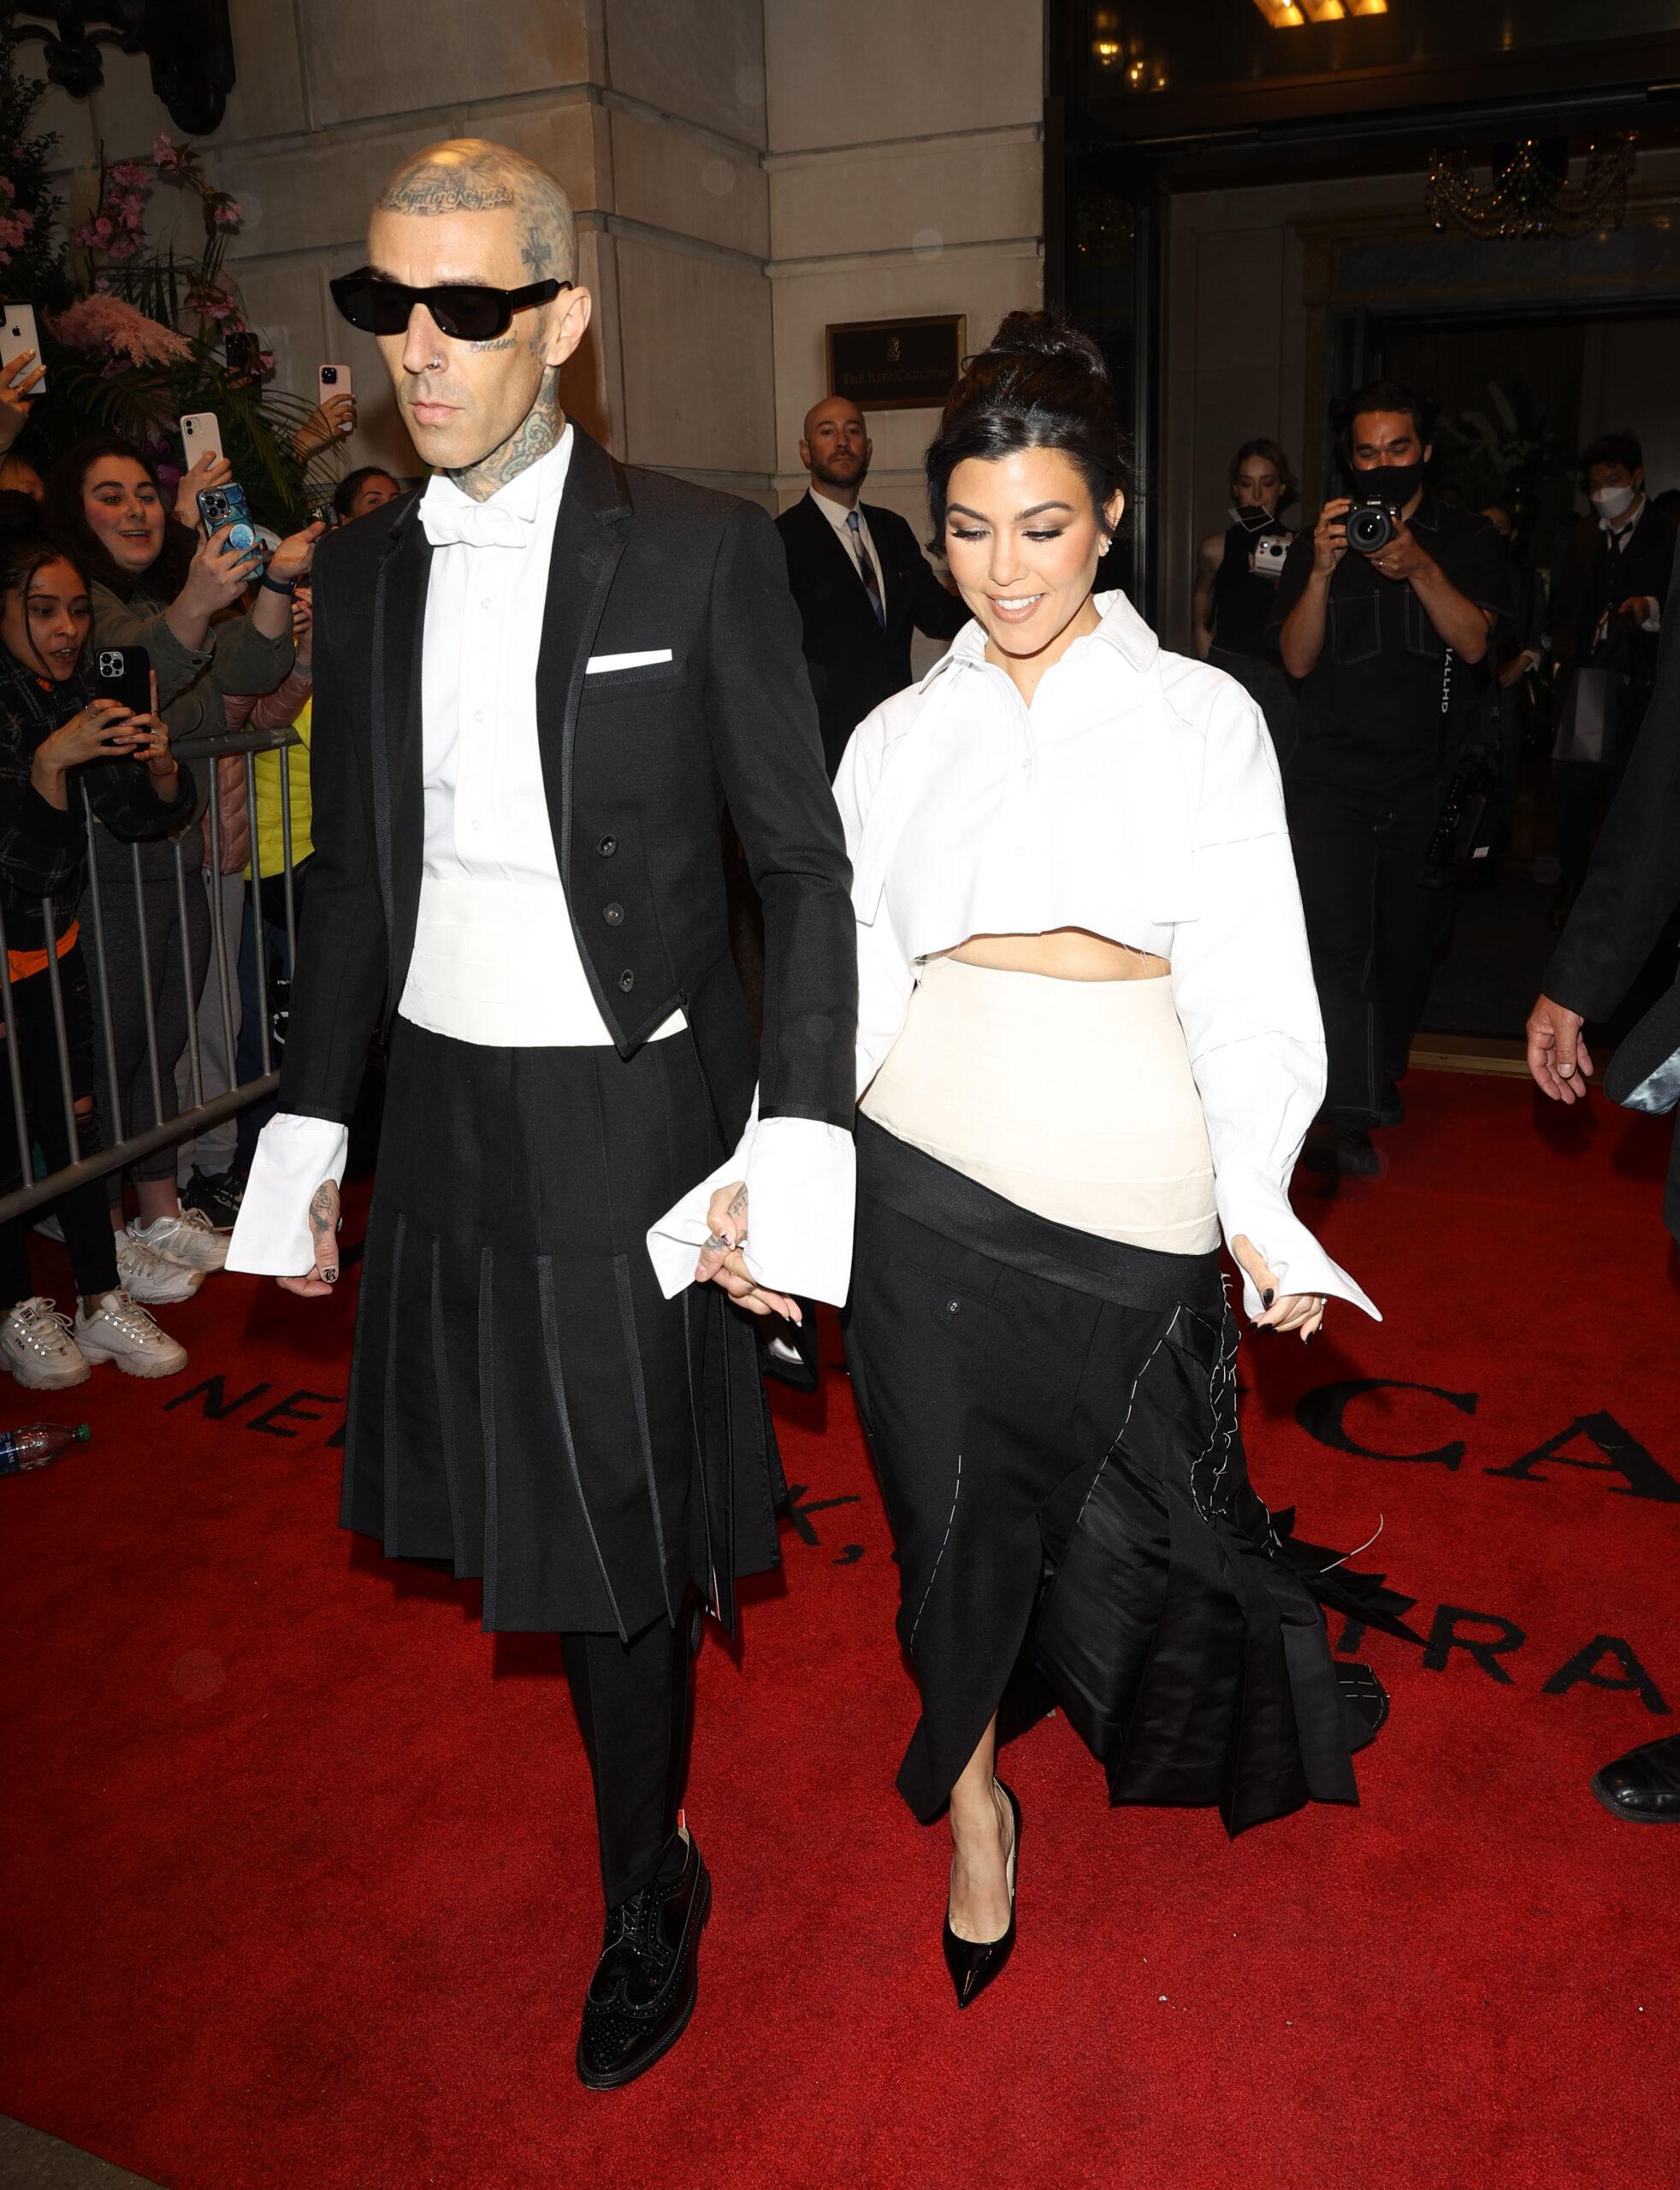 Kourtney Kardashian and Travis Barker leave the Ritz Carlton Hotel on their way to the Met Gala